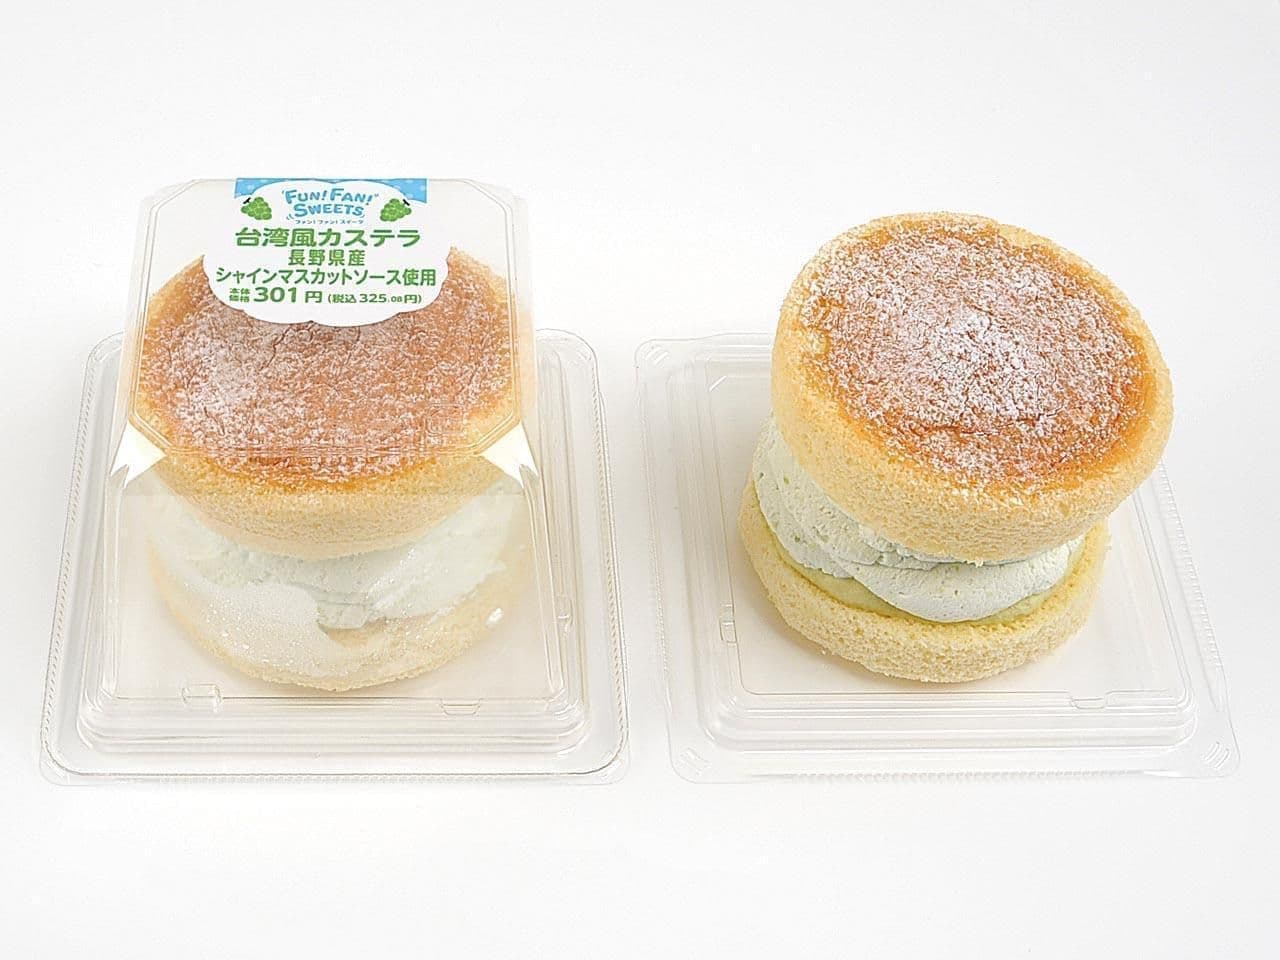 Mini-Stop "Taiwanese-style sponge cake with Nagano-produced Shine Muscat sauce".